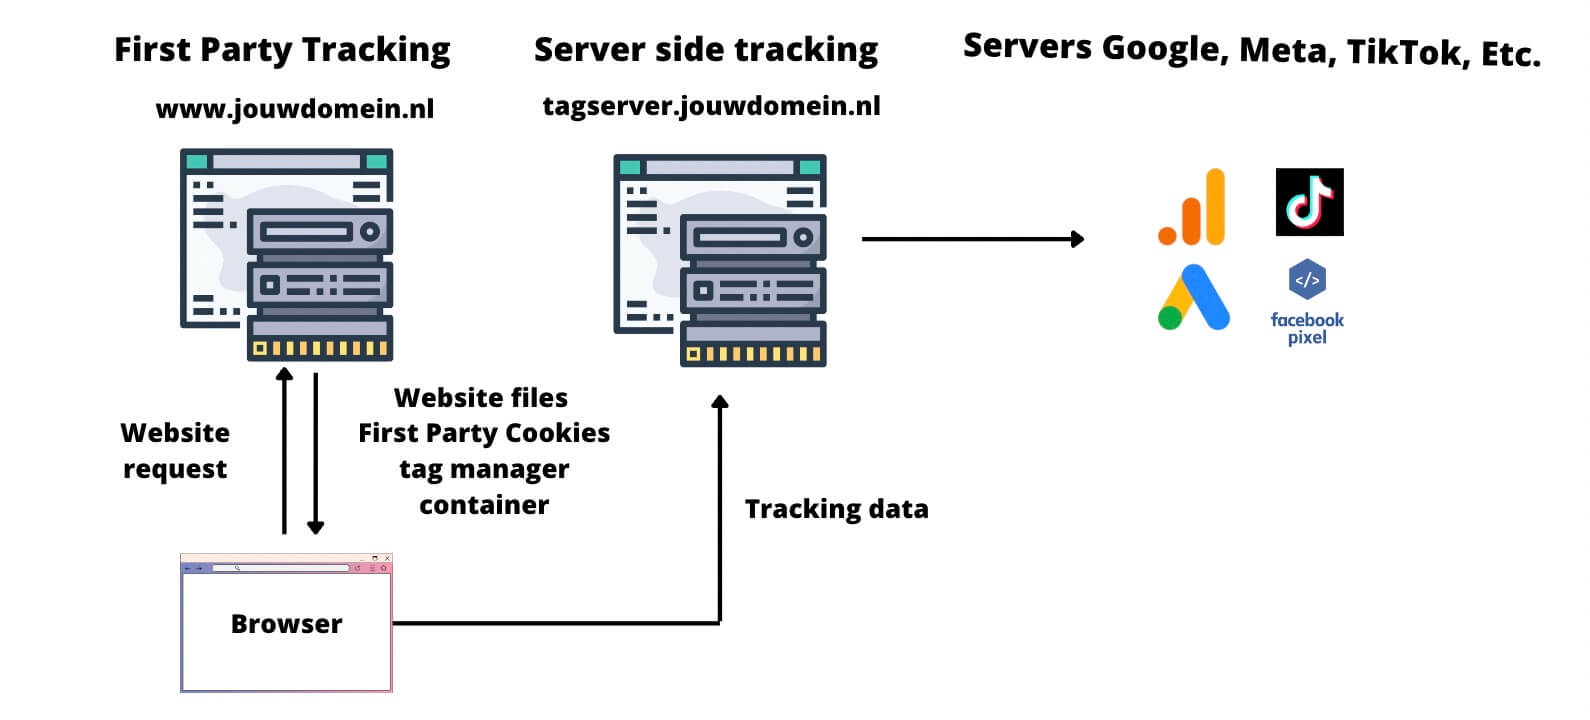 Hoe werkt server side tracking?